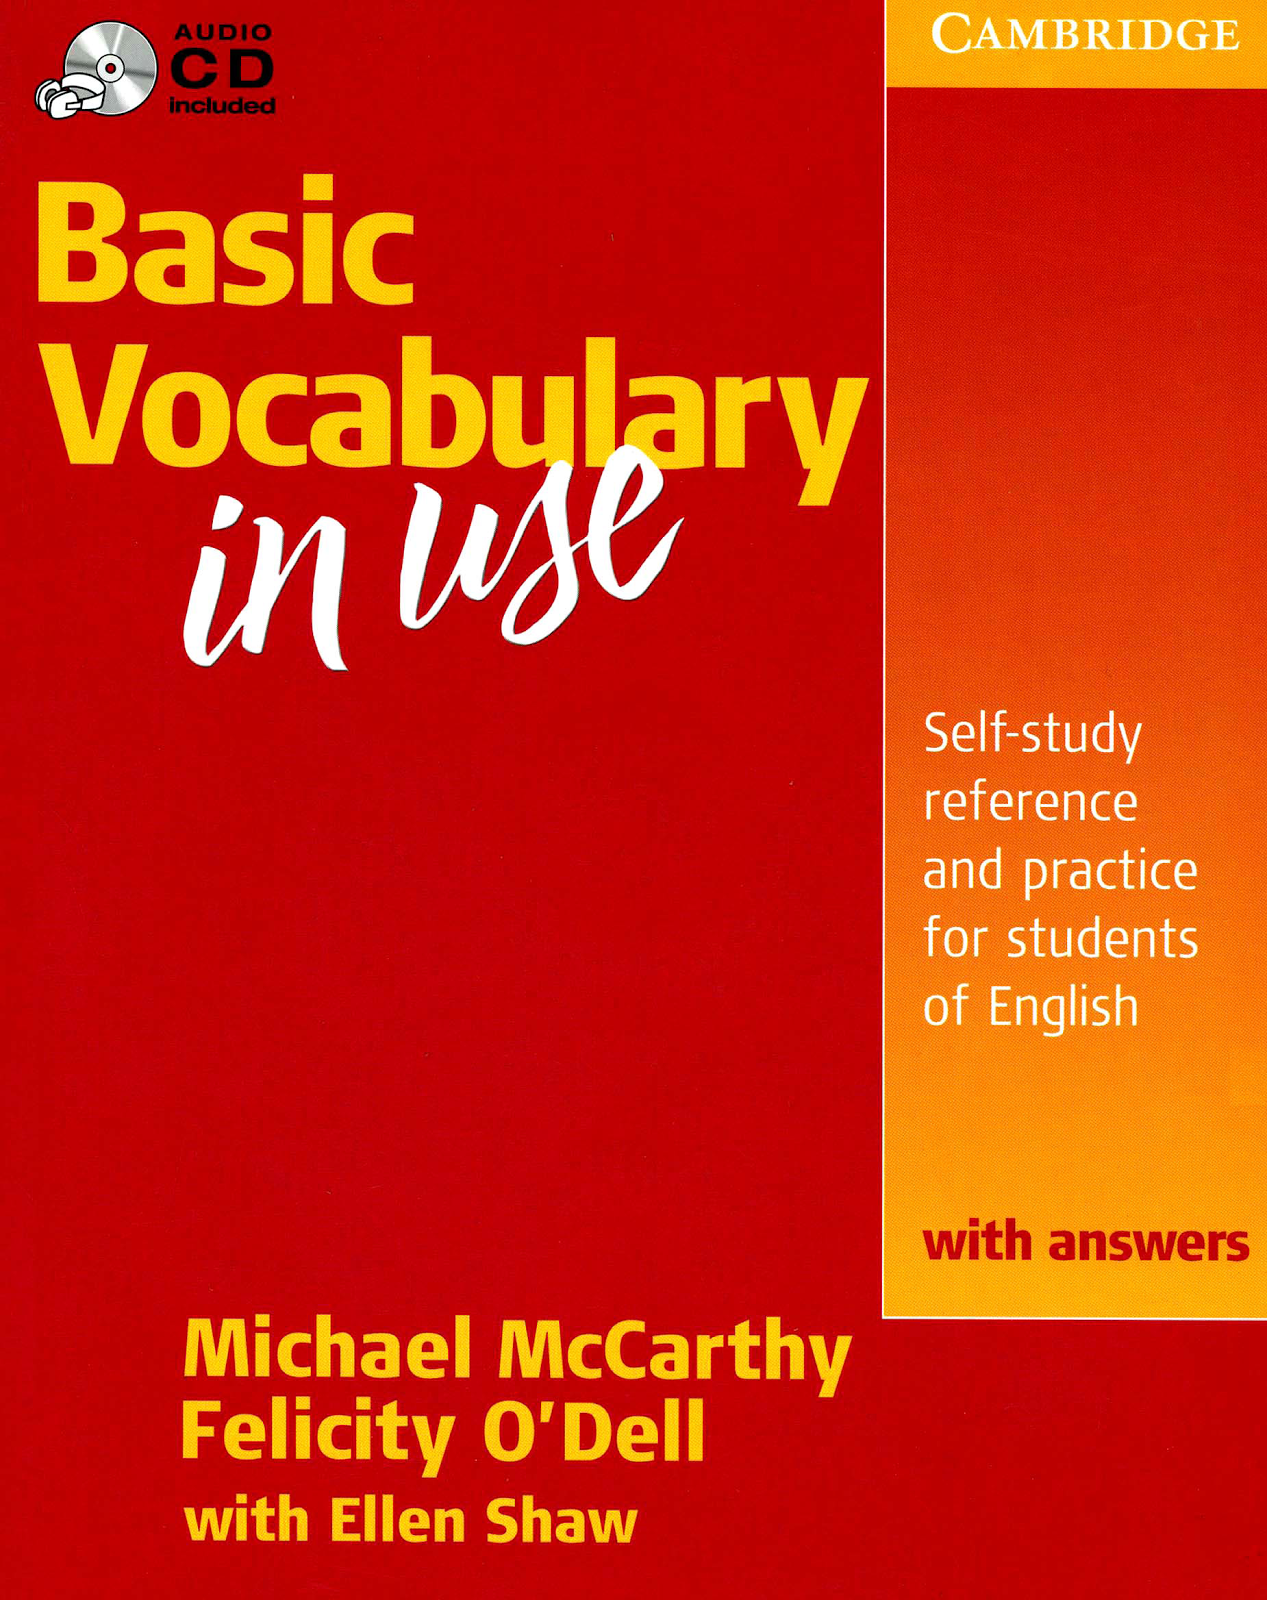 English Vocabulary in Use - Basic ( Ebook + Audio ) Download | English ...